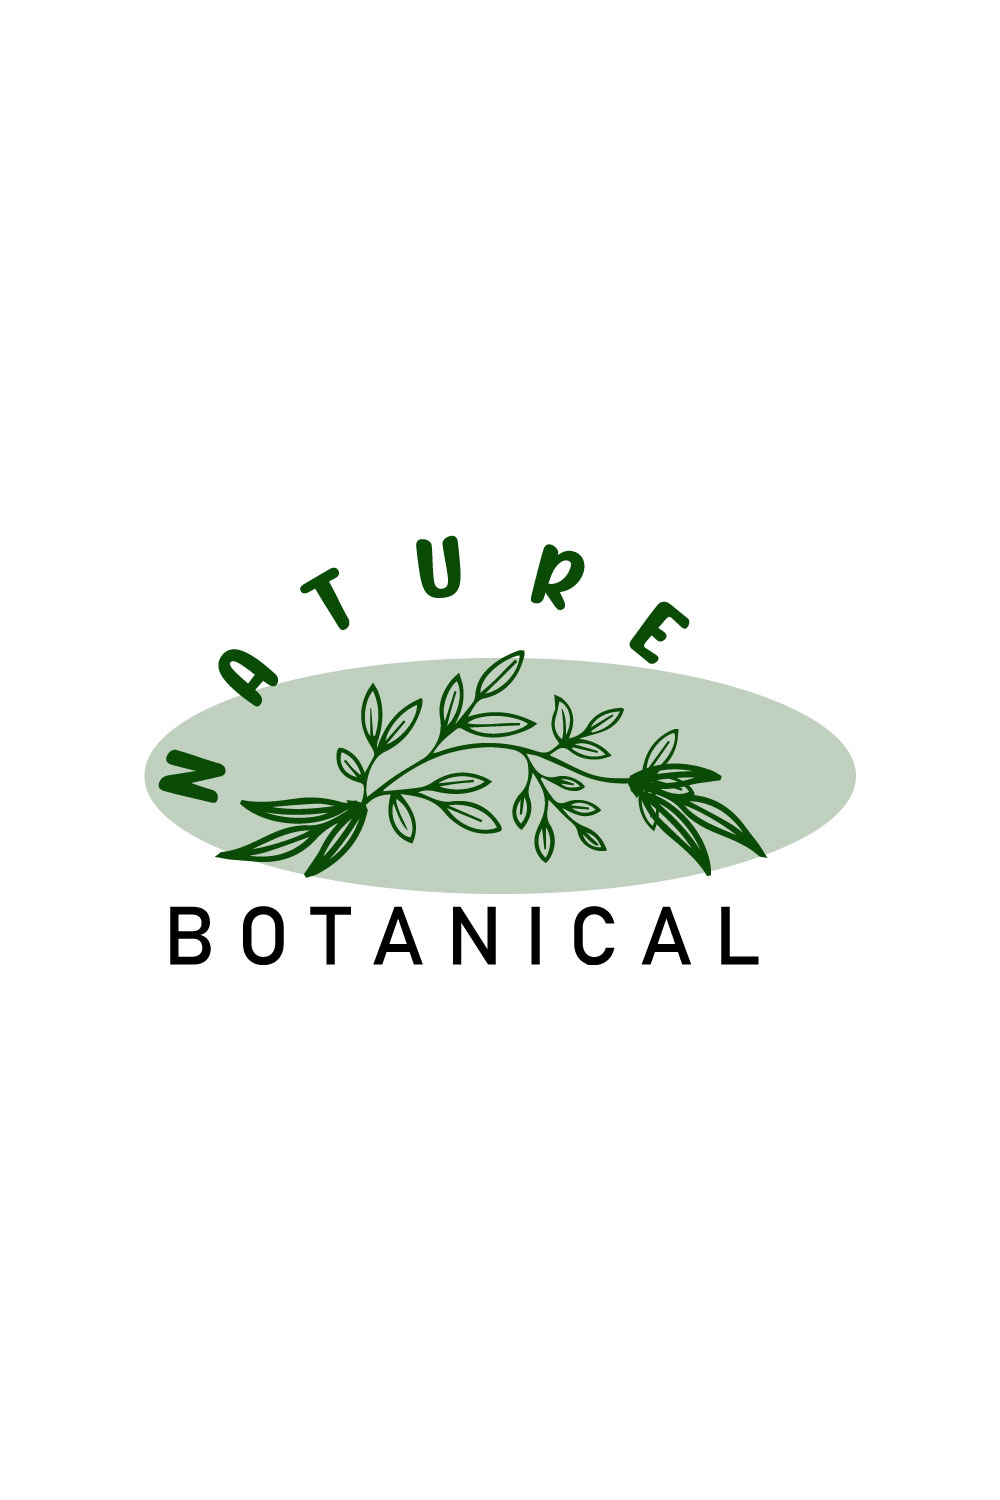 Free botanical natural beauty logo pinterest preview image.